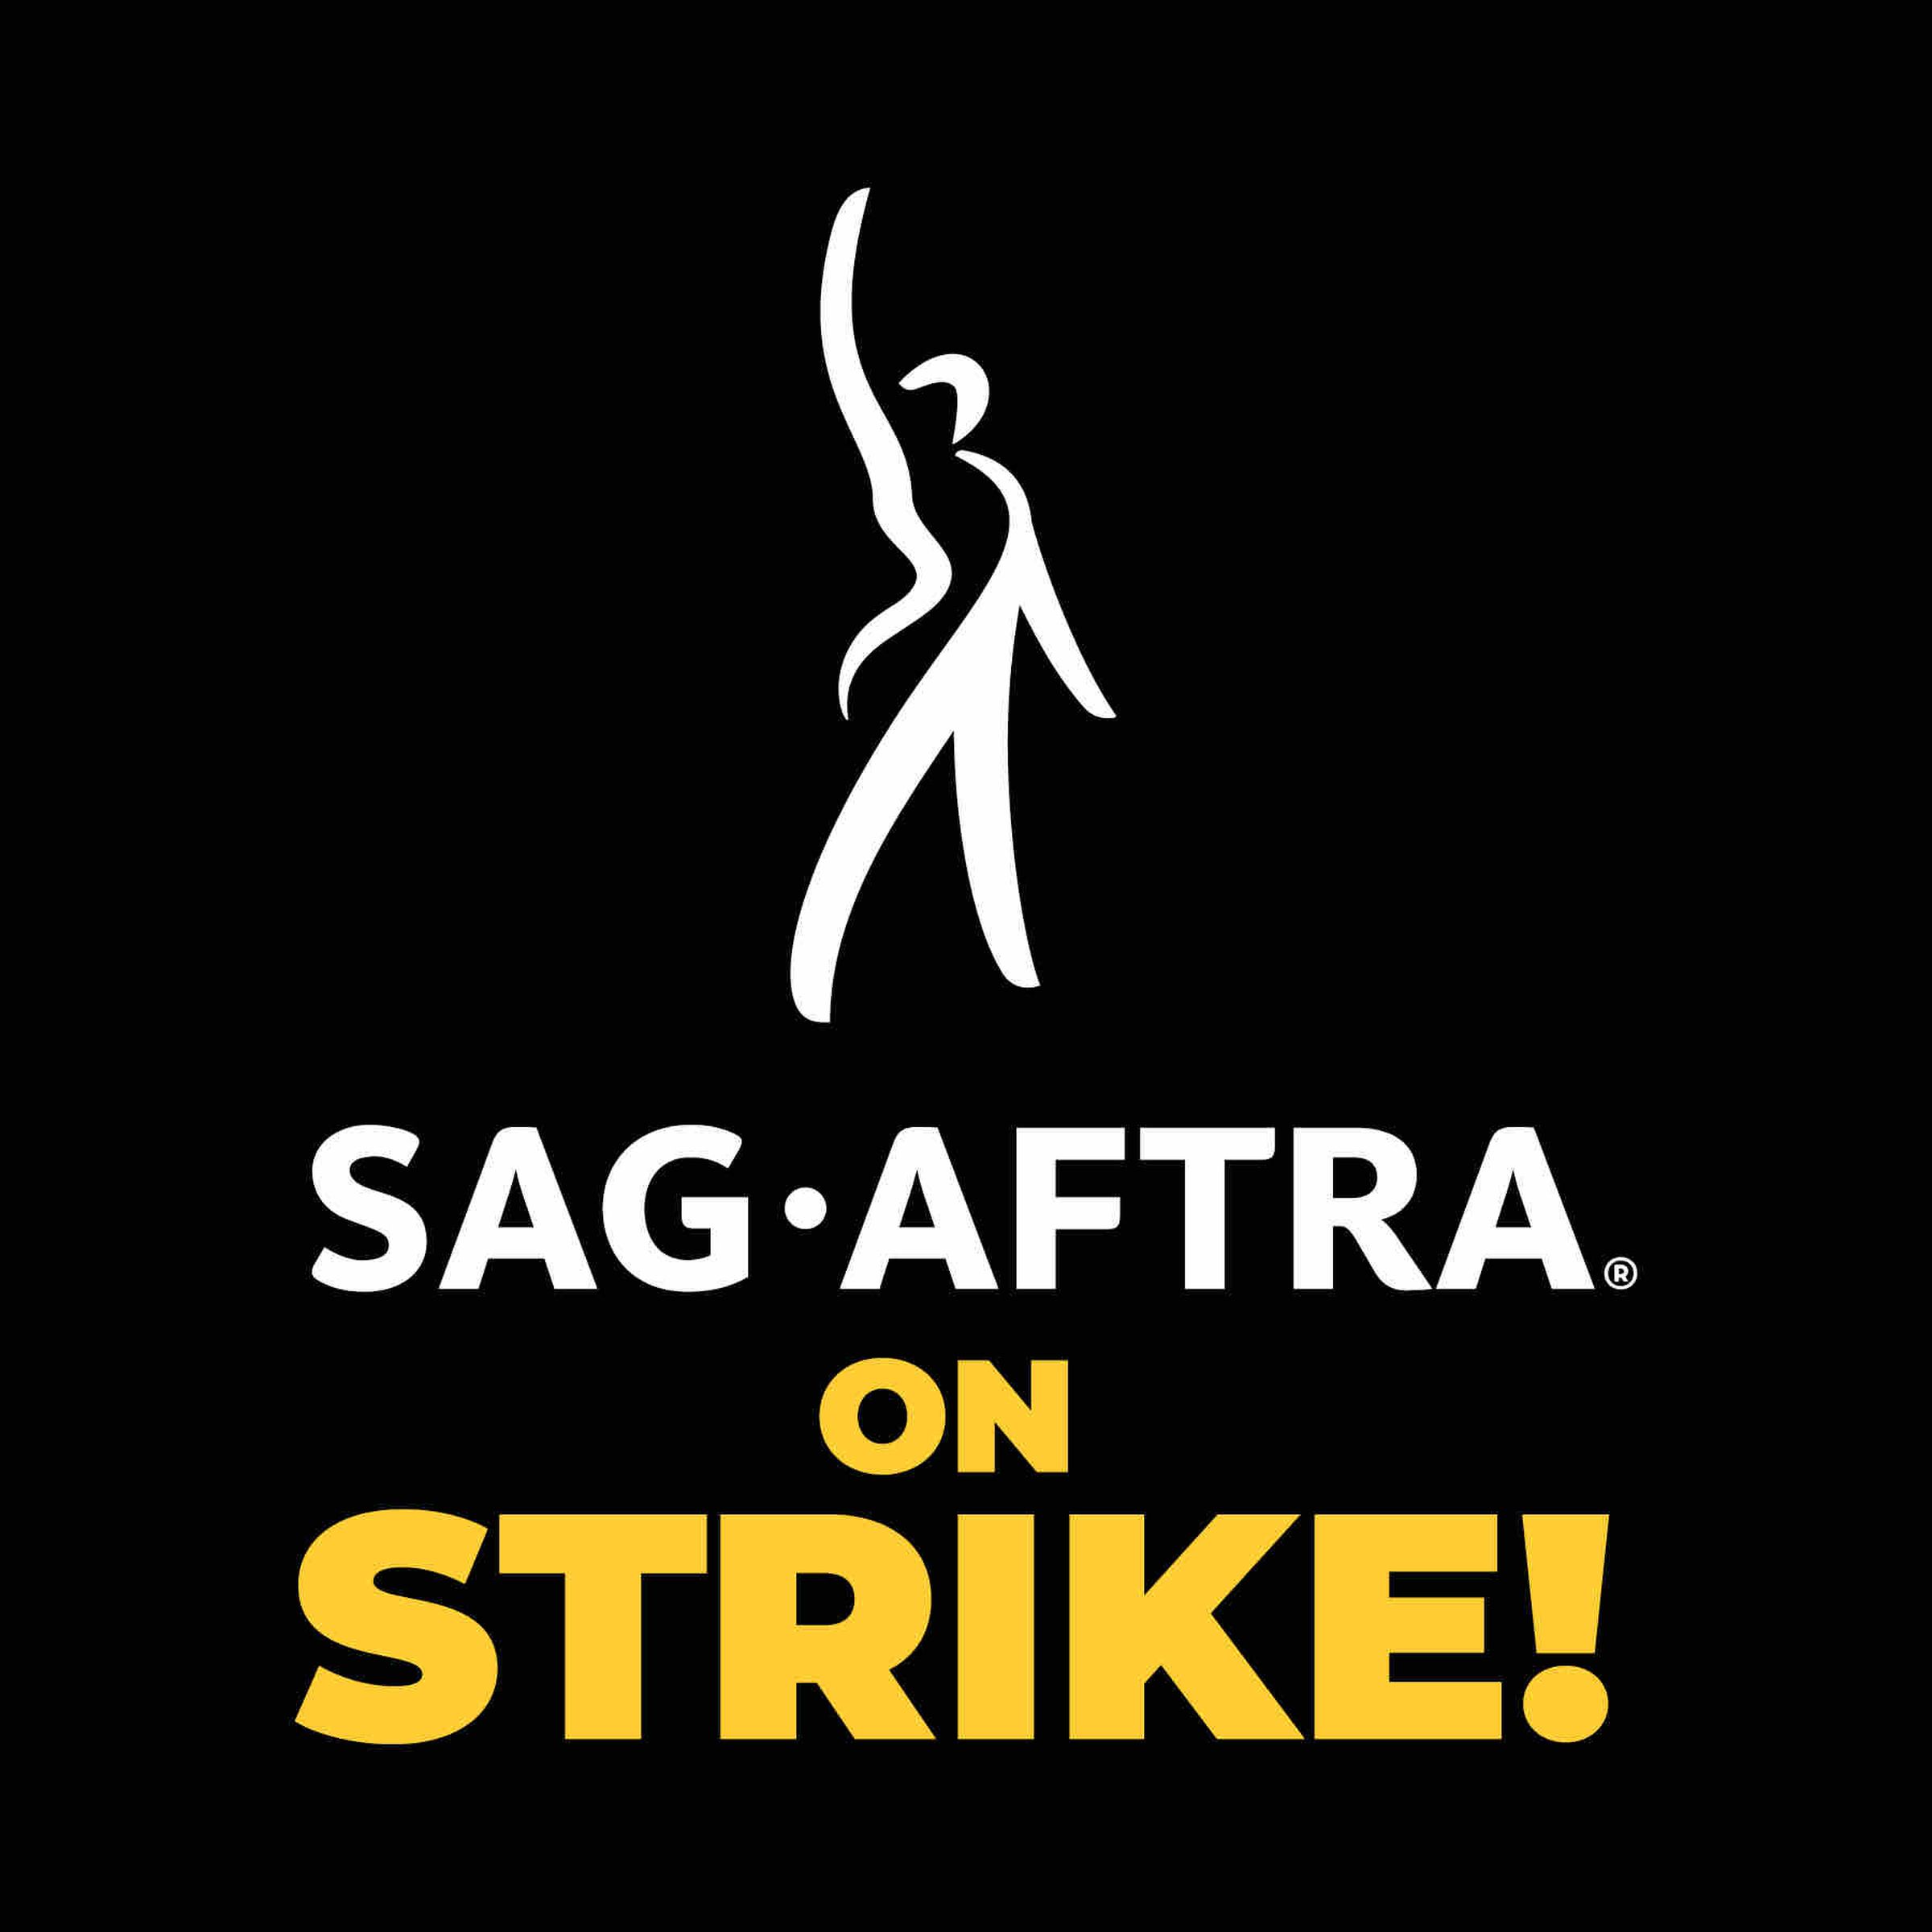 SAG-AFTRA’s striking logo, a minimalist illustration of a performer stop the words “SAG-AFTRA ON STRIKE!”